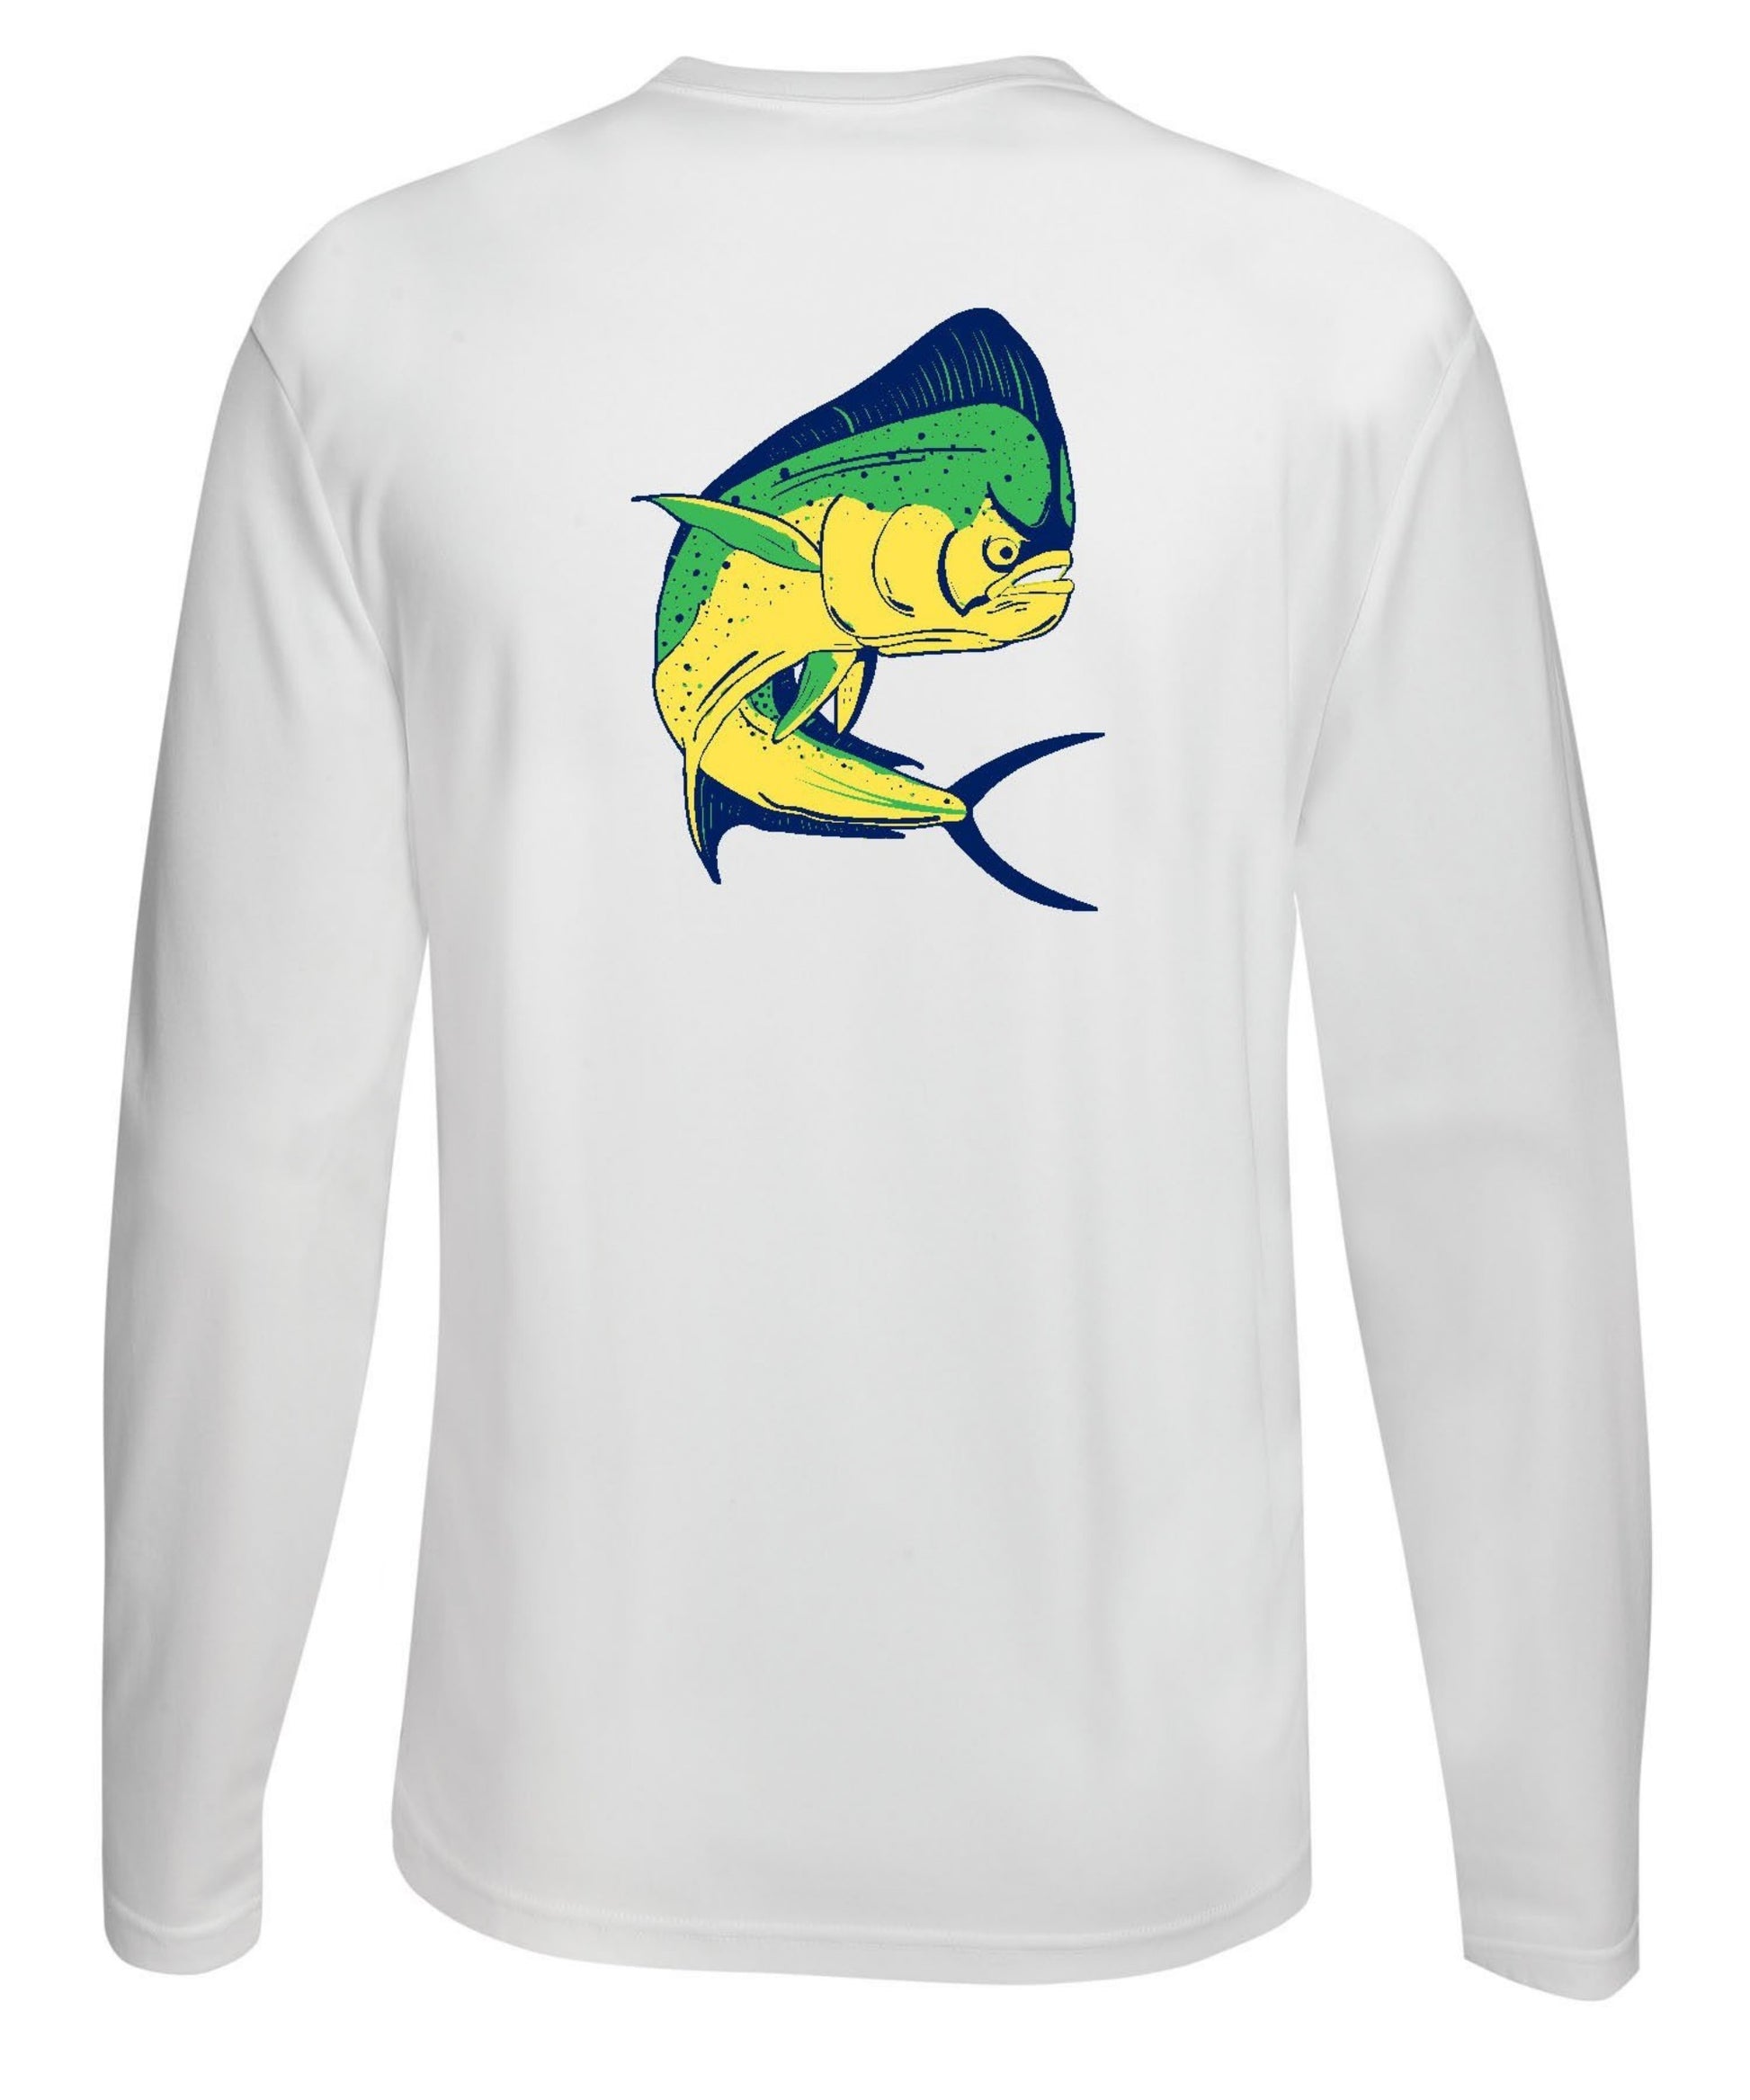 Mahi Fishing Performance Dry-Fit Long Sleeve White Shirt